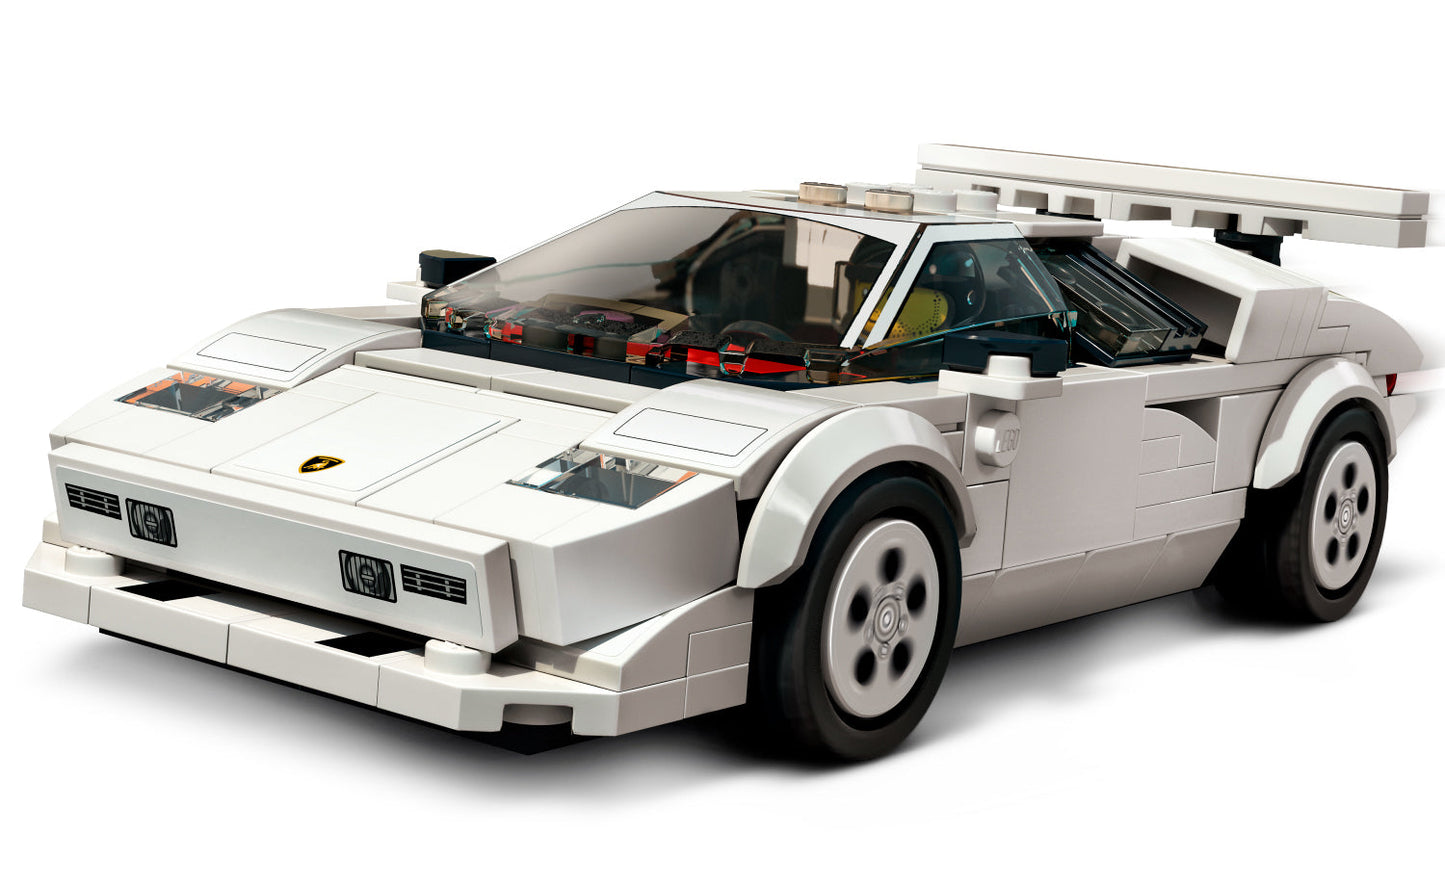 Lego Speed Champions Lamborghini Countach - 76908